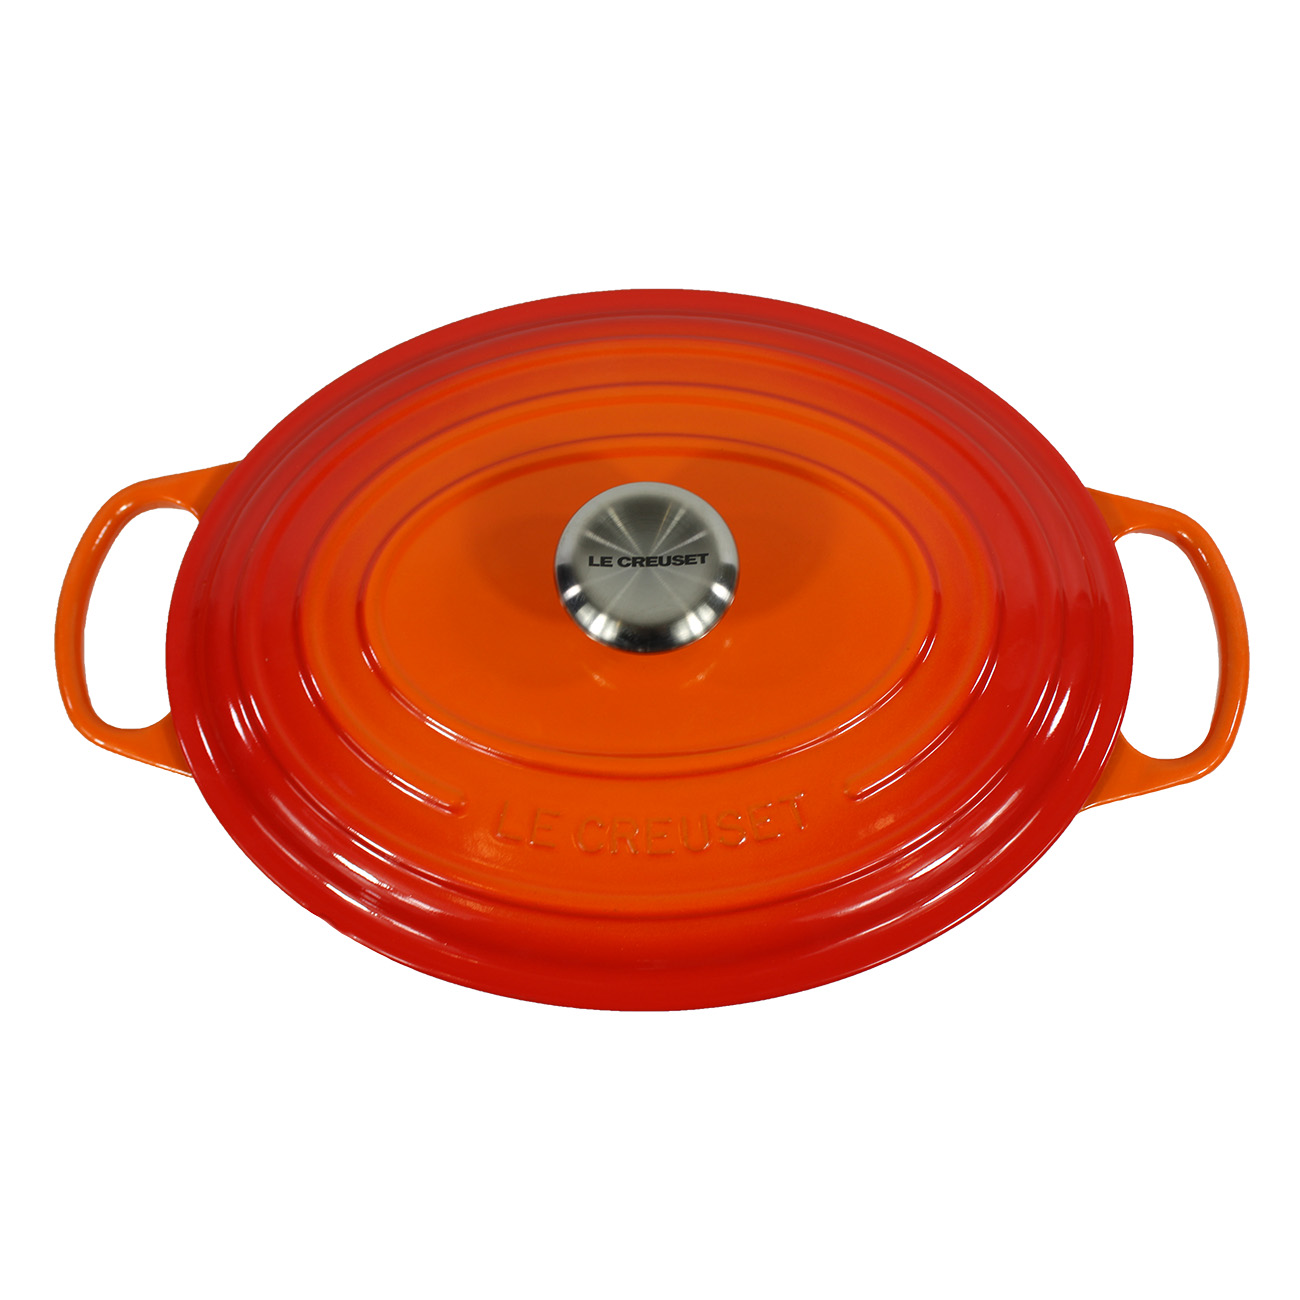 LE CREUSET Bräter oval (Metall) Topf 31 cm-orange